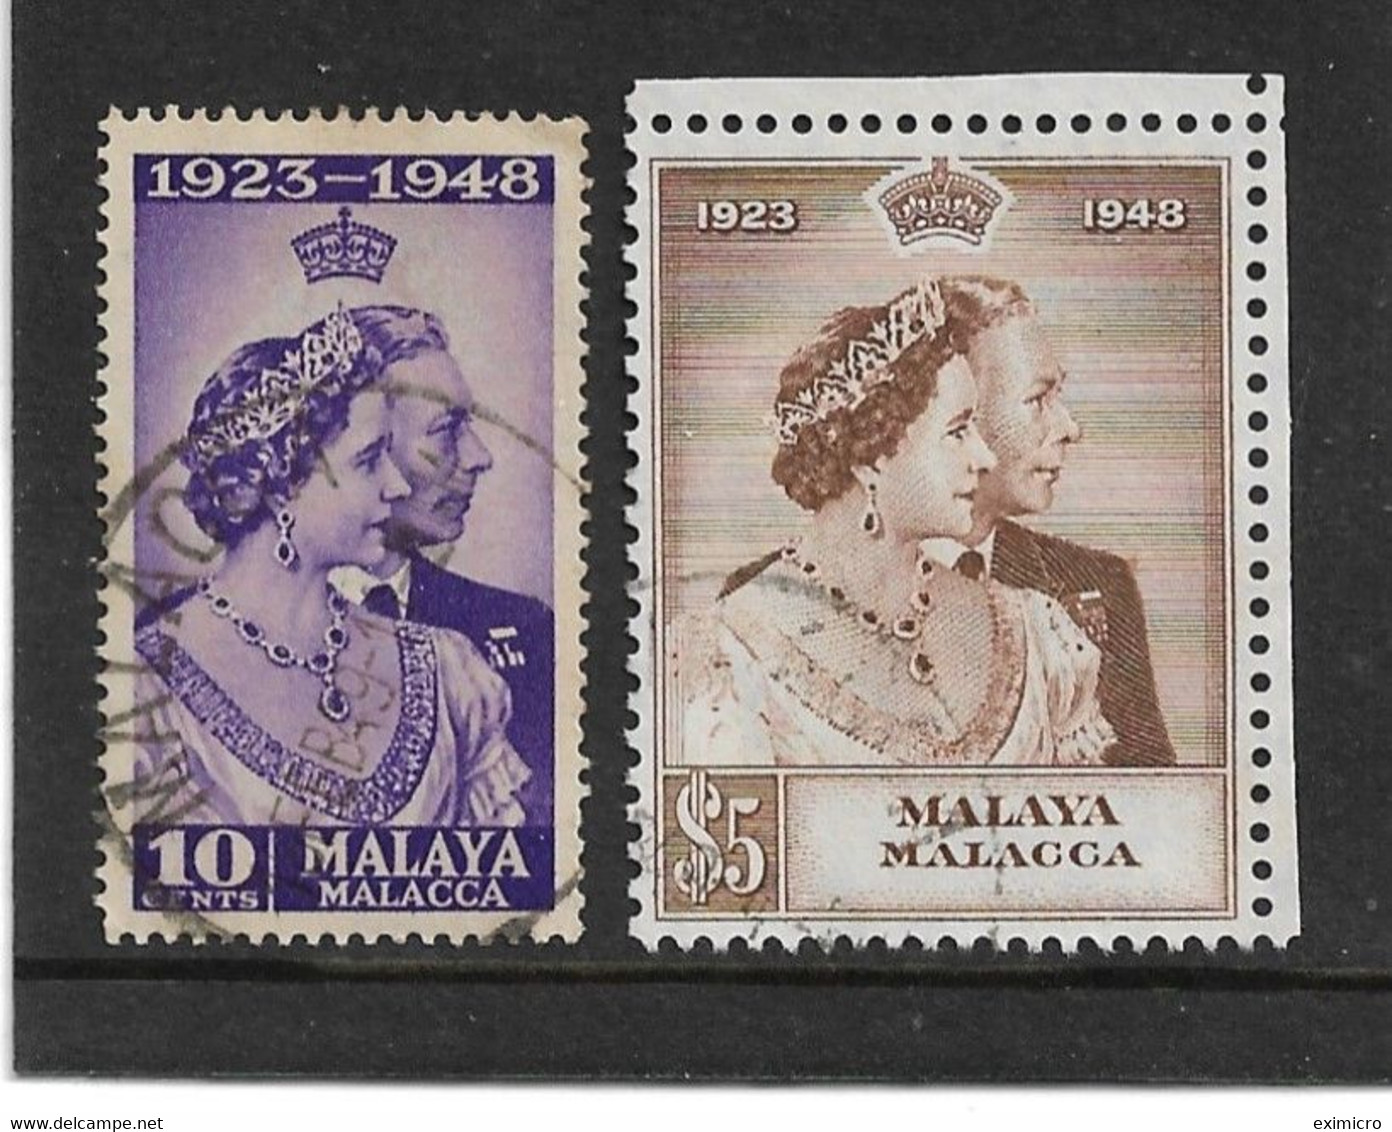 MALACCA 1948 SILVER WEDDING SET FINE USED Cat £51.75 - Malacca